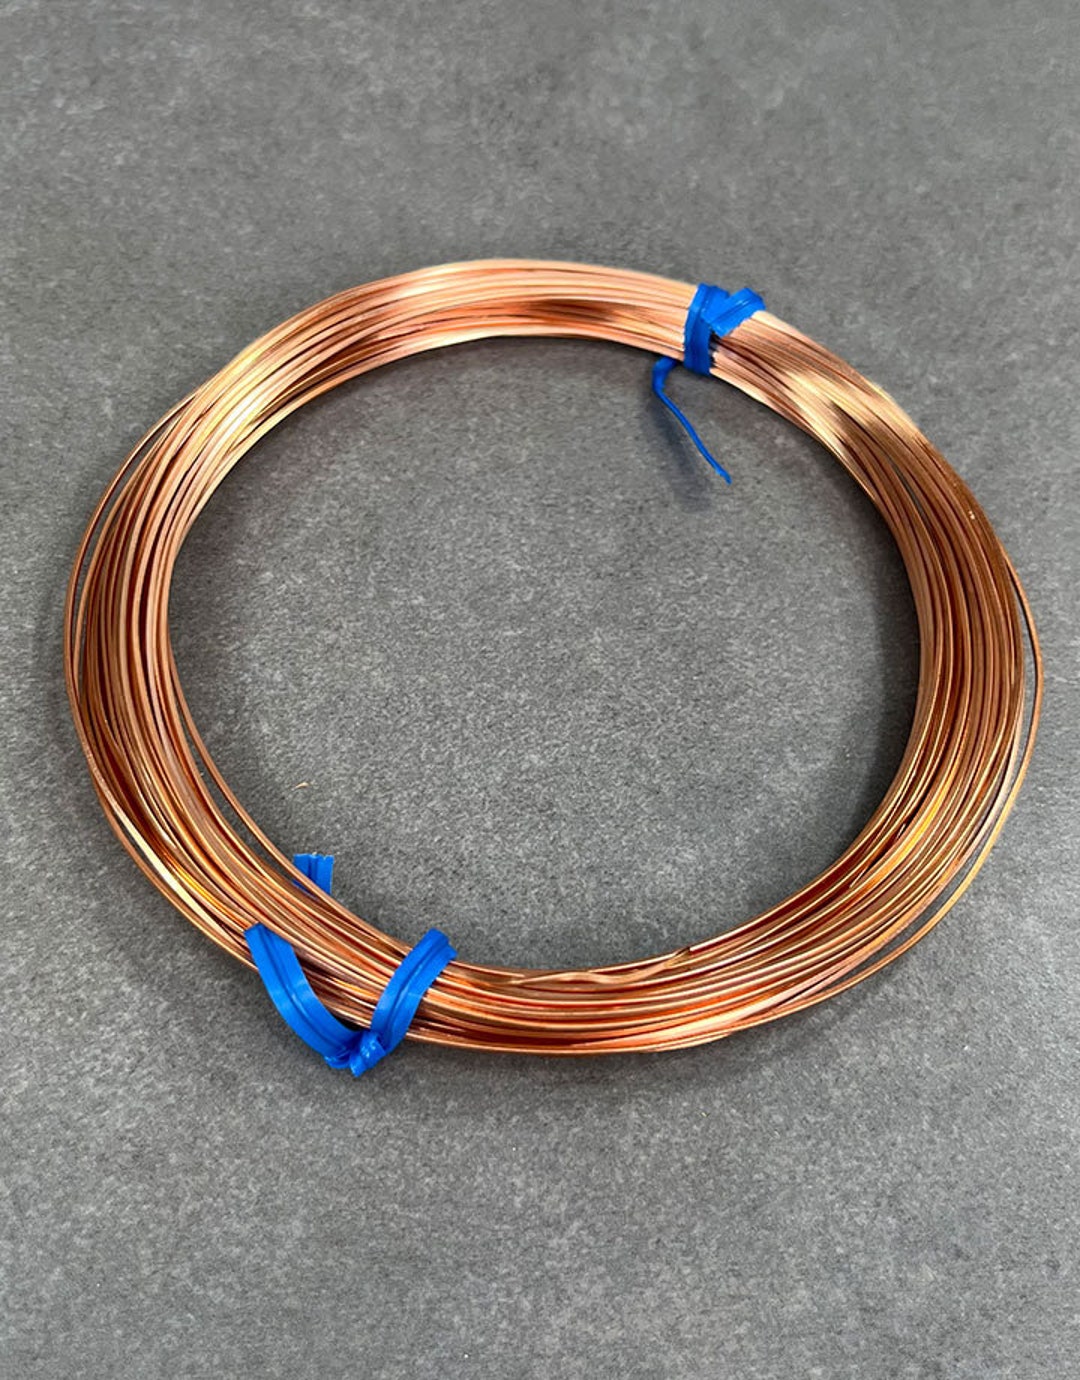 Copper Square Wire 22ga 0.64mm Soft approx. 96.3ft CSW22 